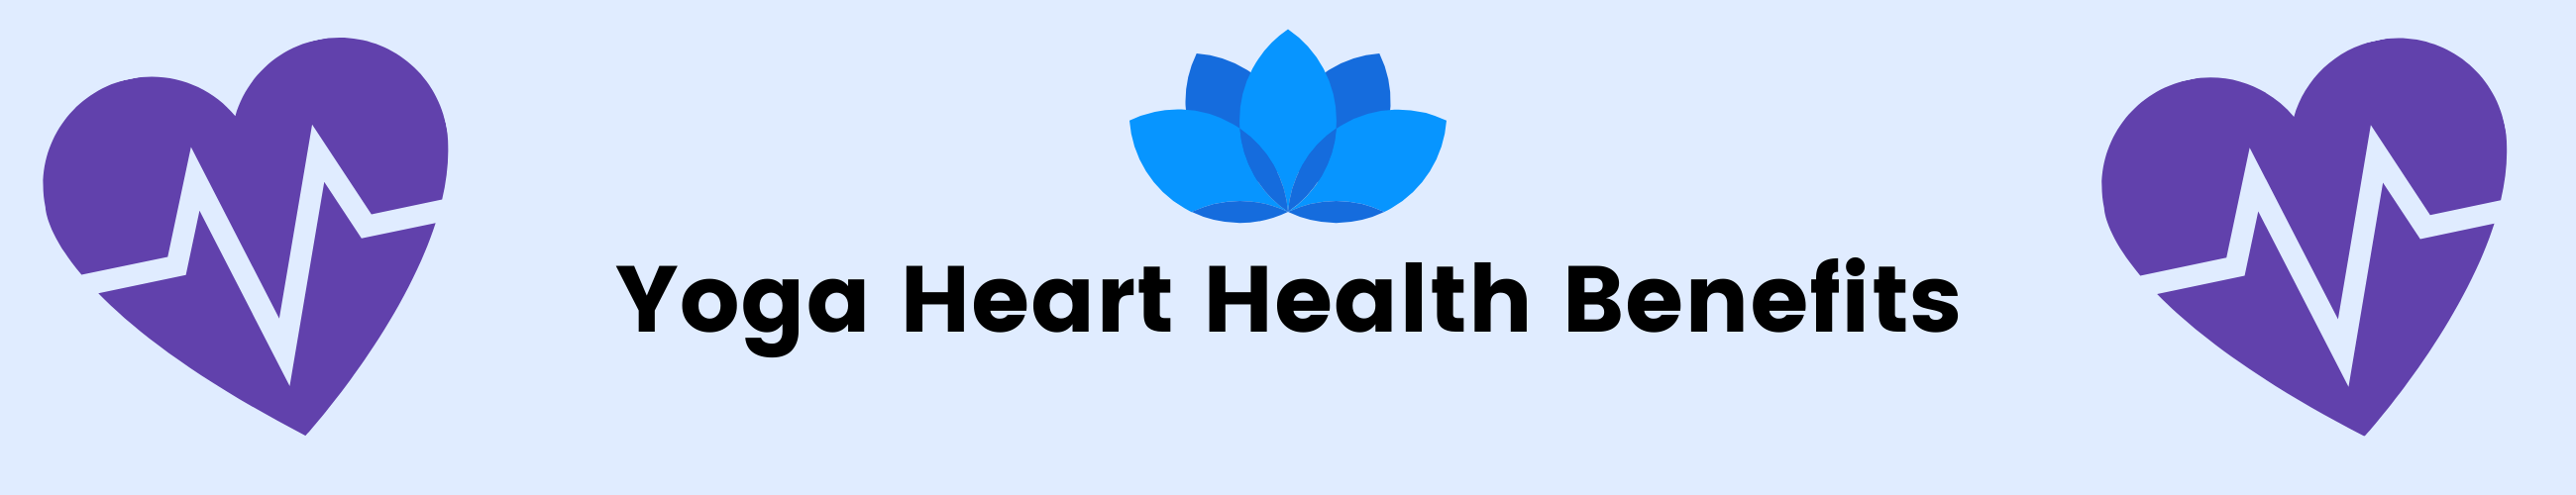 Yoga Heart Health Benefits